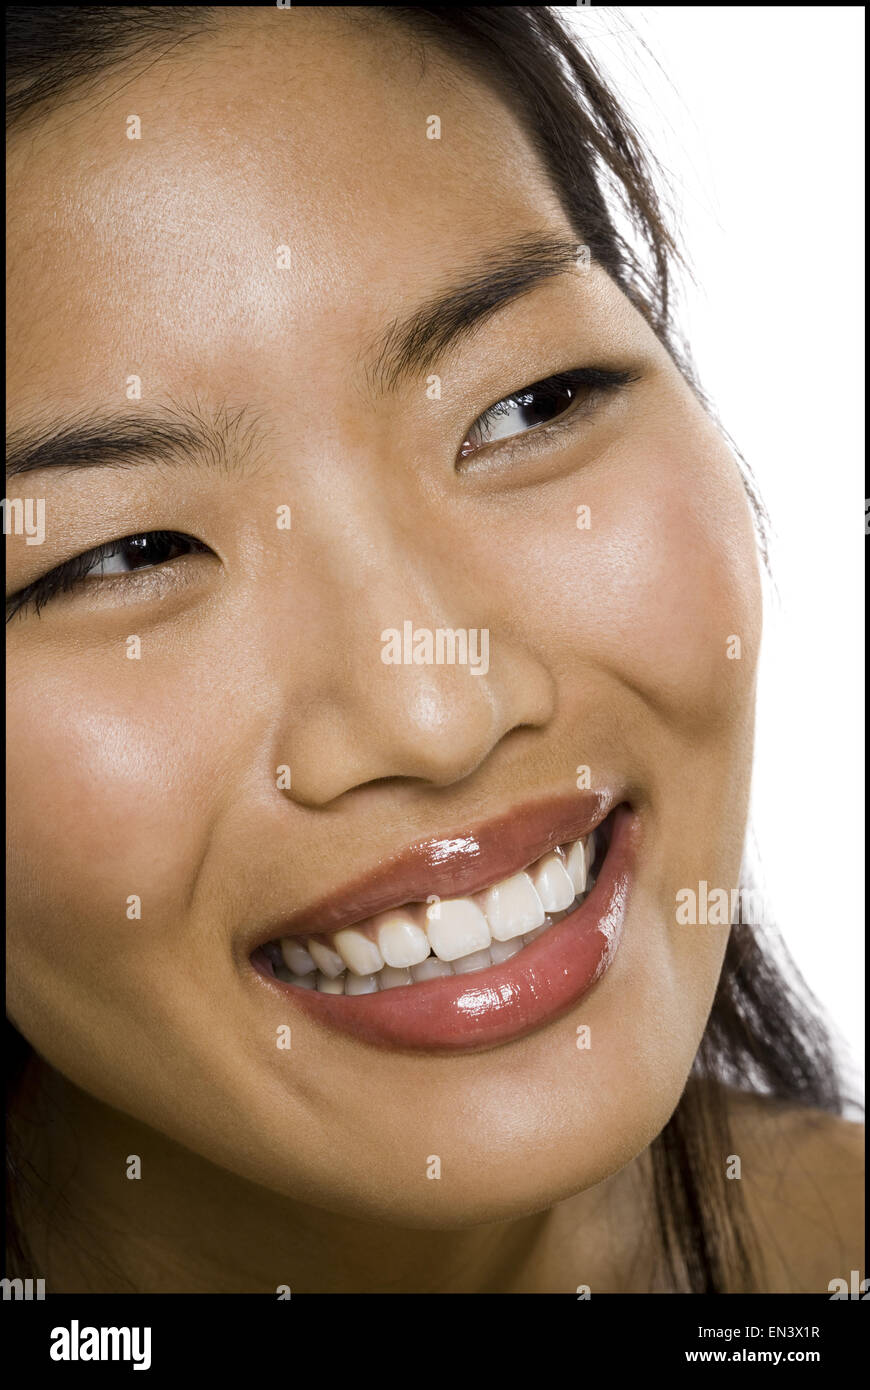 Closeup of woman smiling Stock Photo